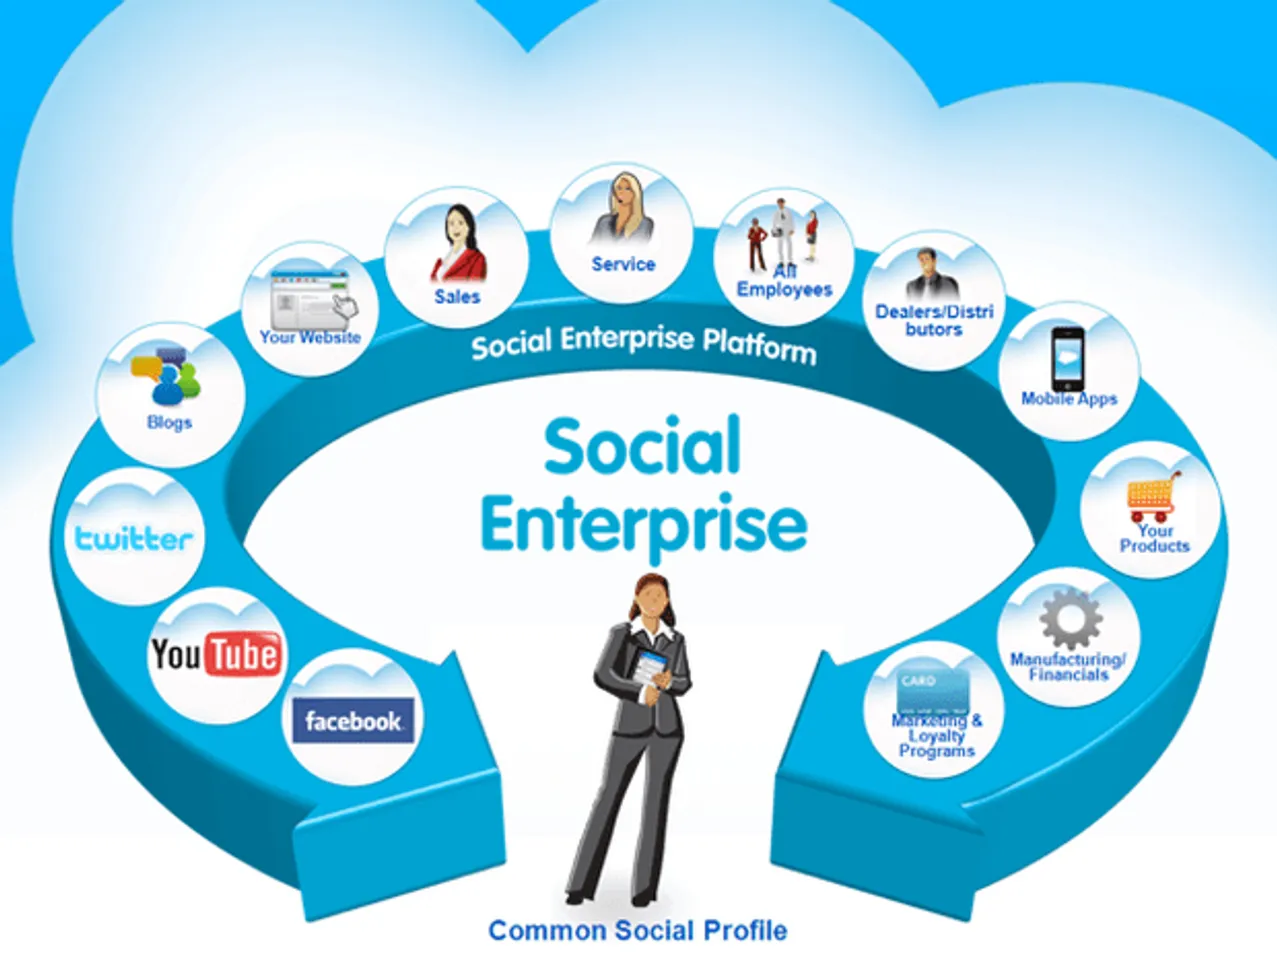 Seven interesting deployments of Enterprise Social Networks by Indian enterprises